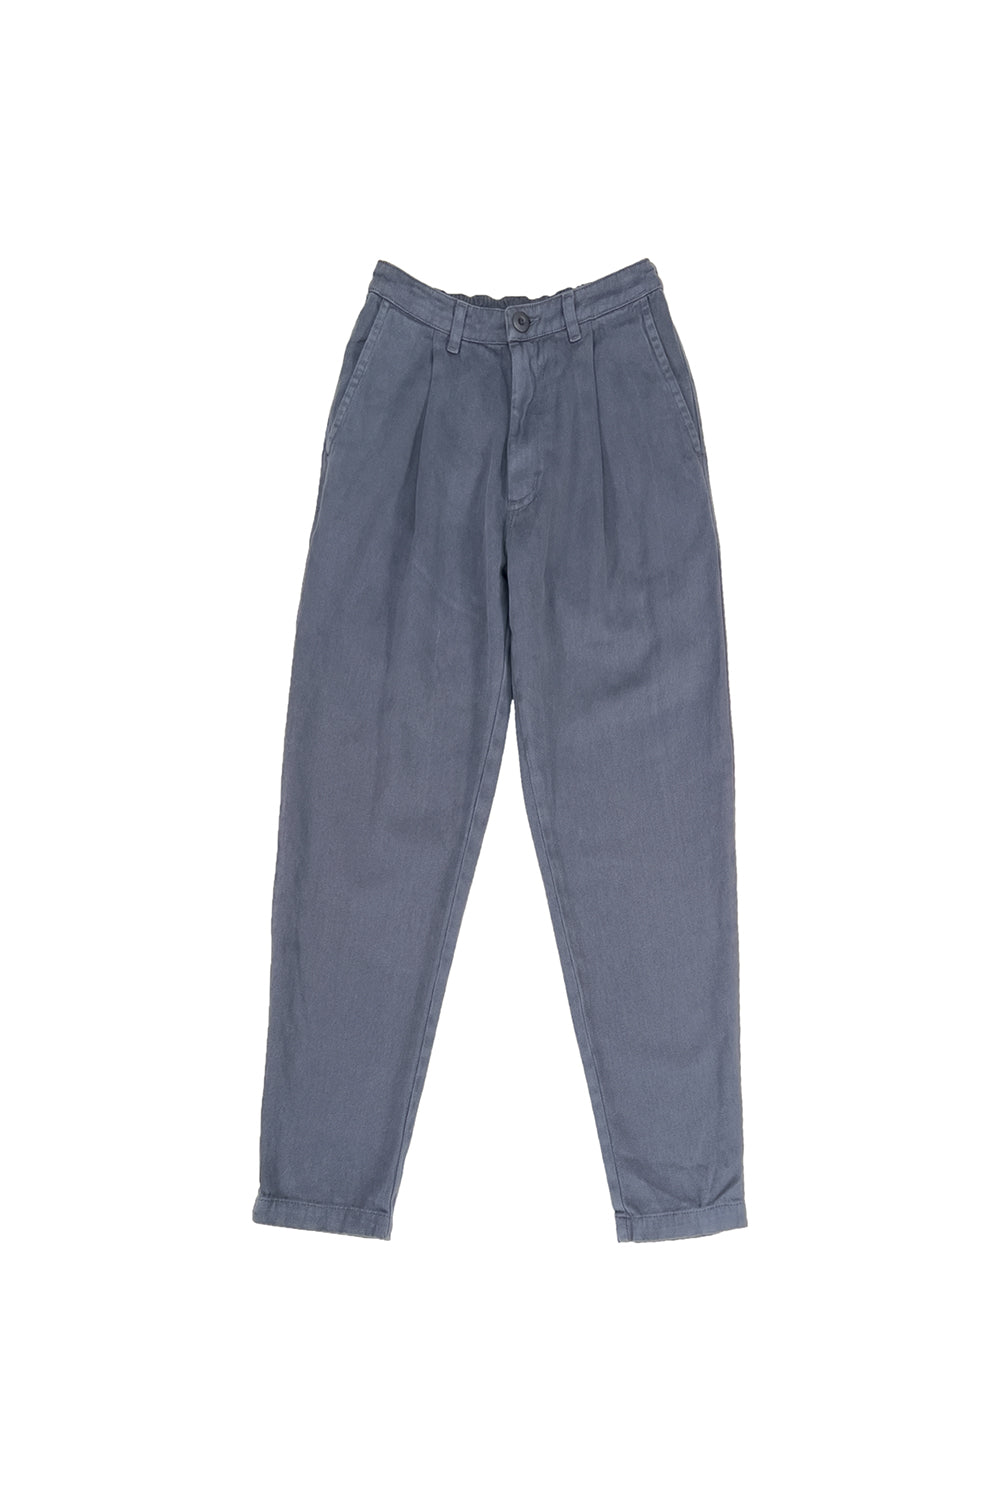 Acuma Pant | Jungmaven Hemp Clothing & Accessories / Color: Diesel Gray